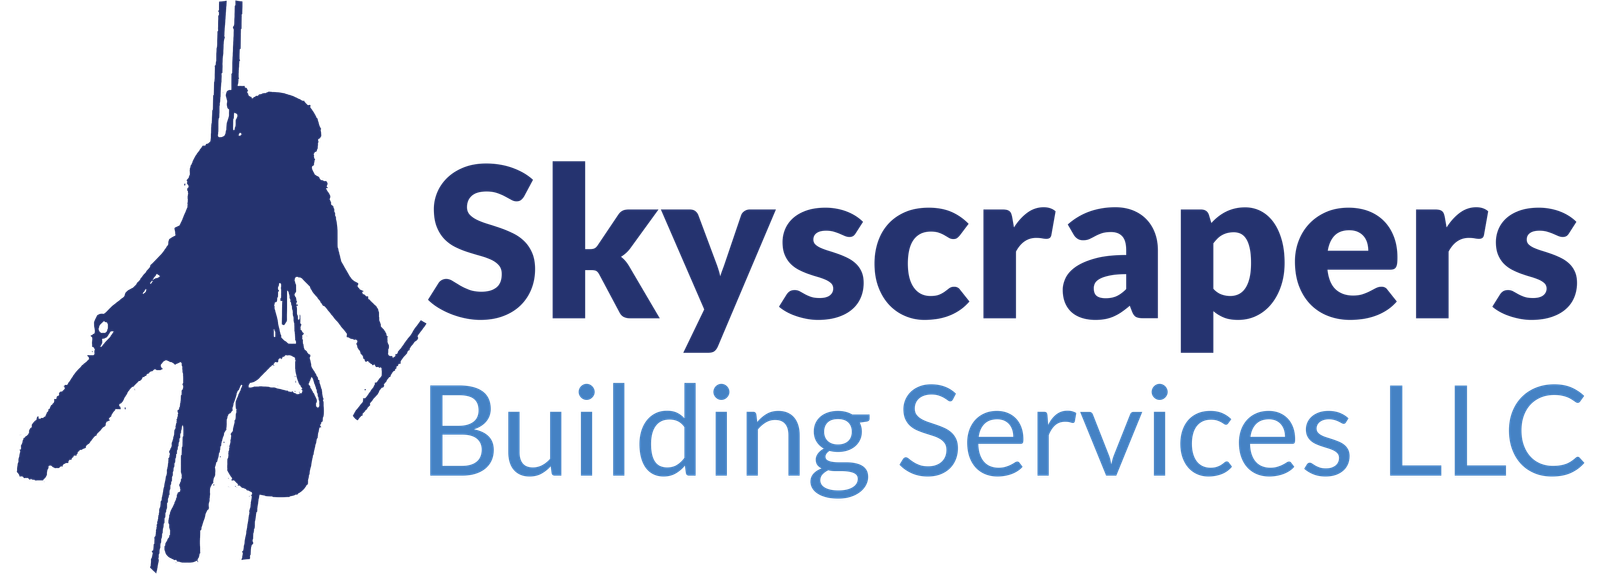 Skyscrapers Building Services LLC Logo